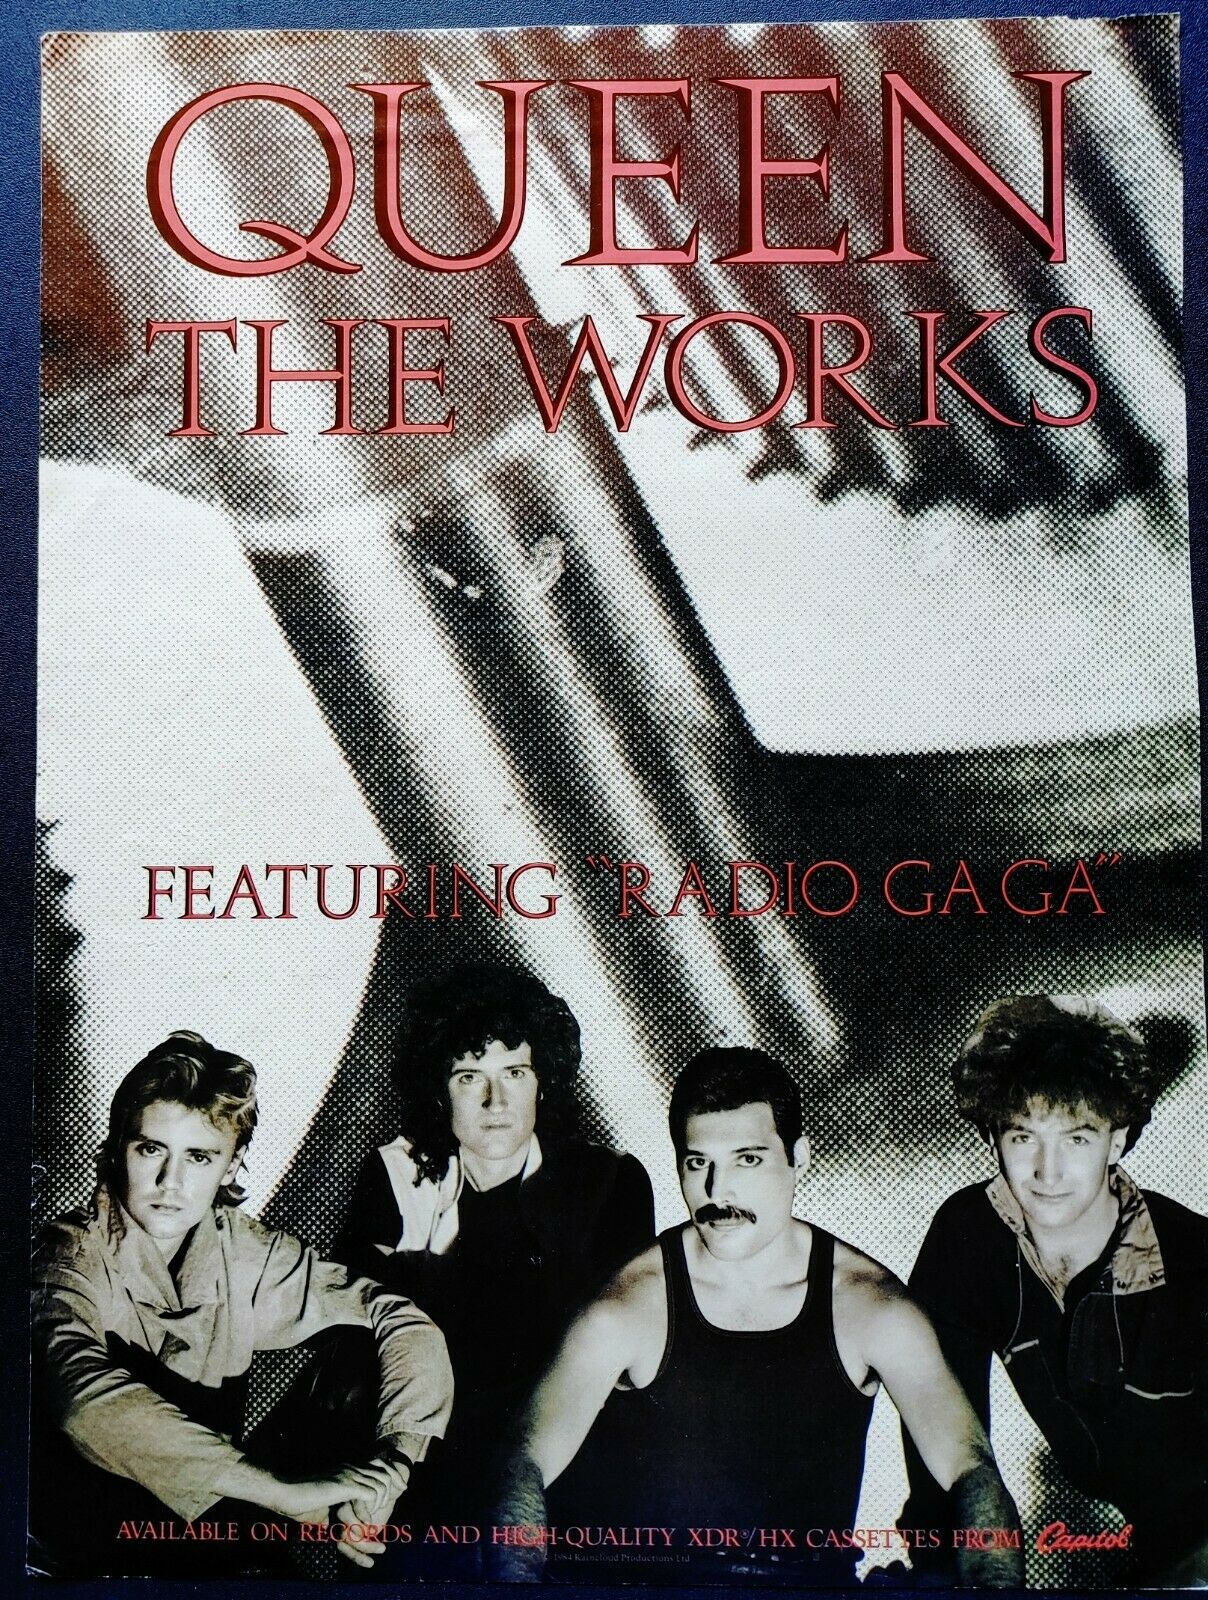 Queen The Works Radio Gaga 1984 Promo Ad